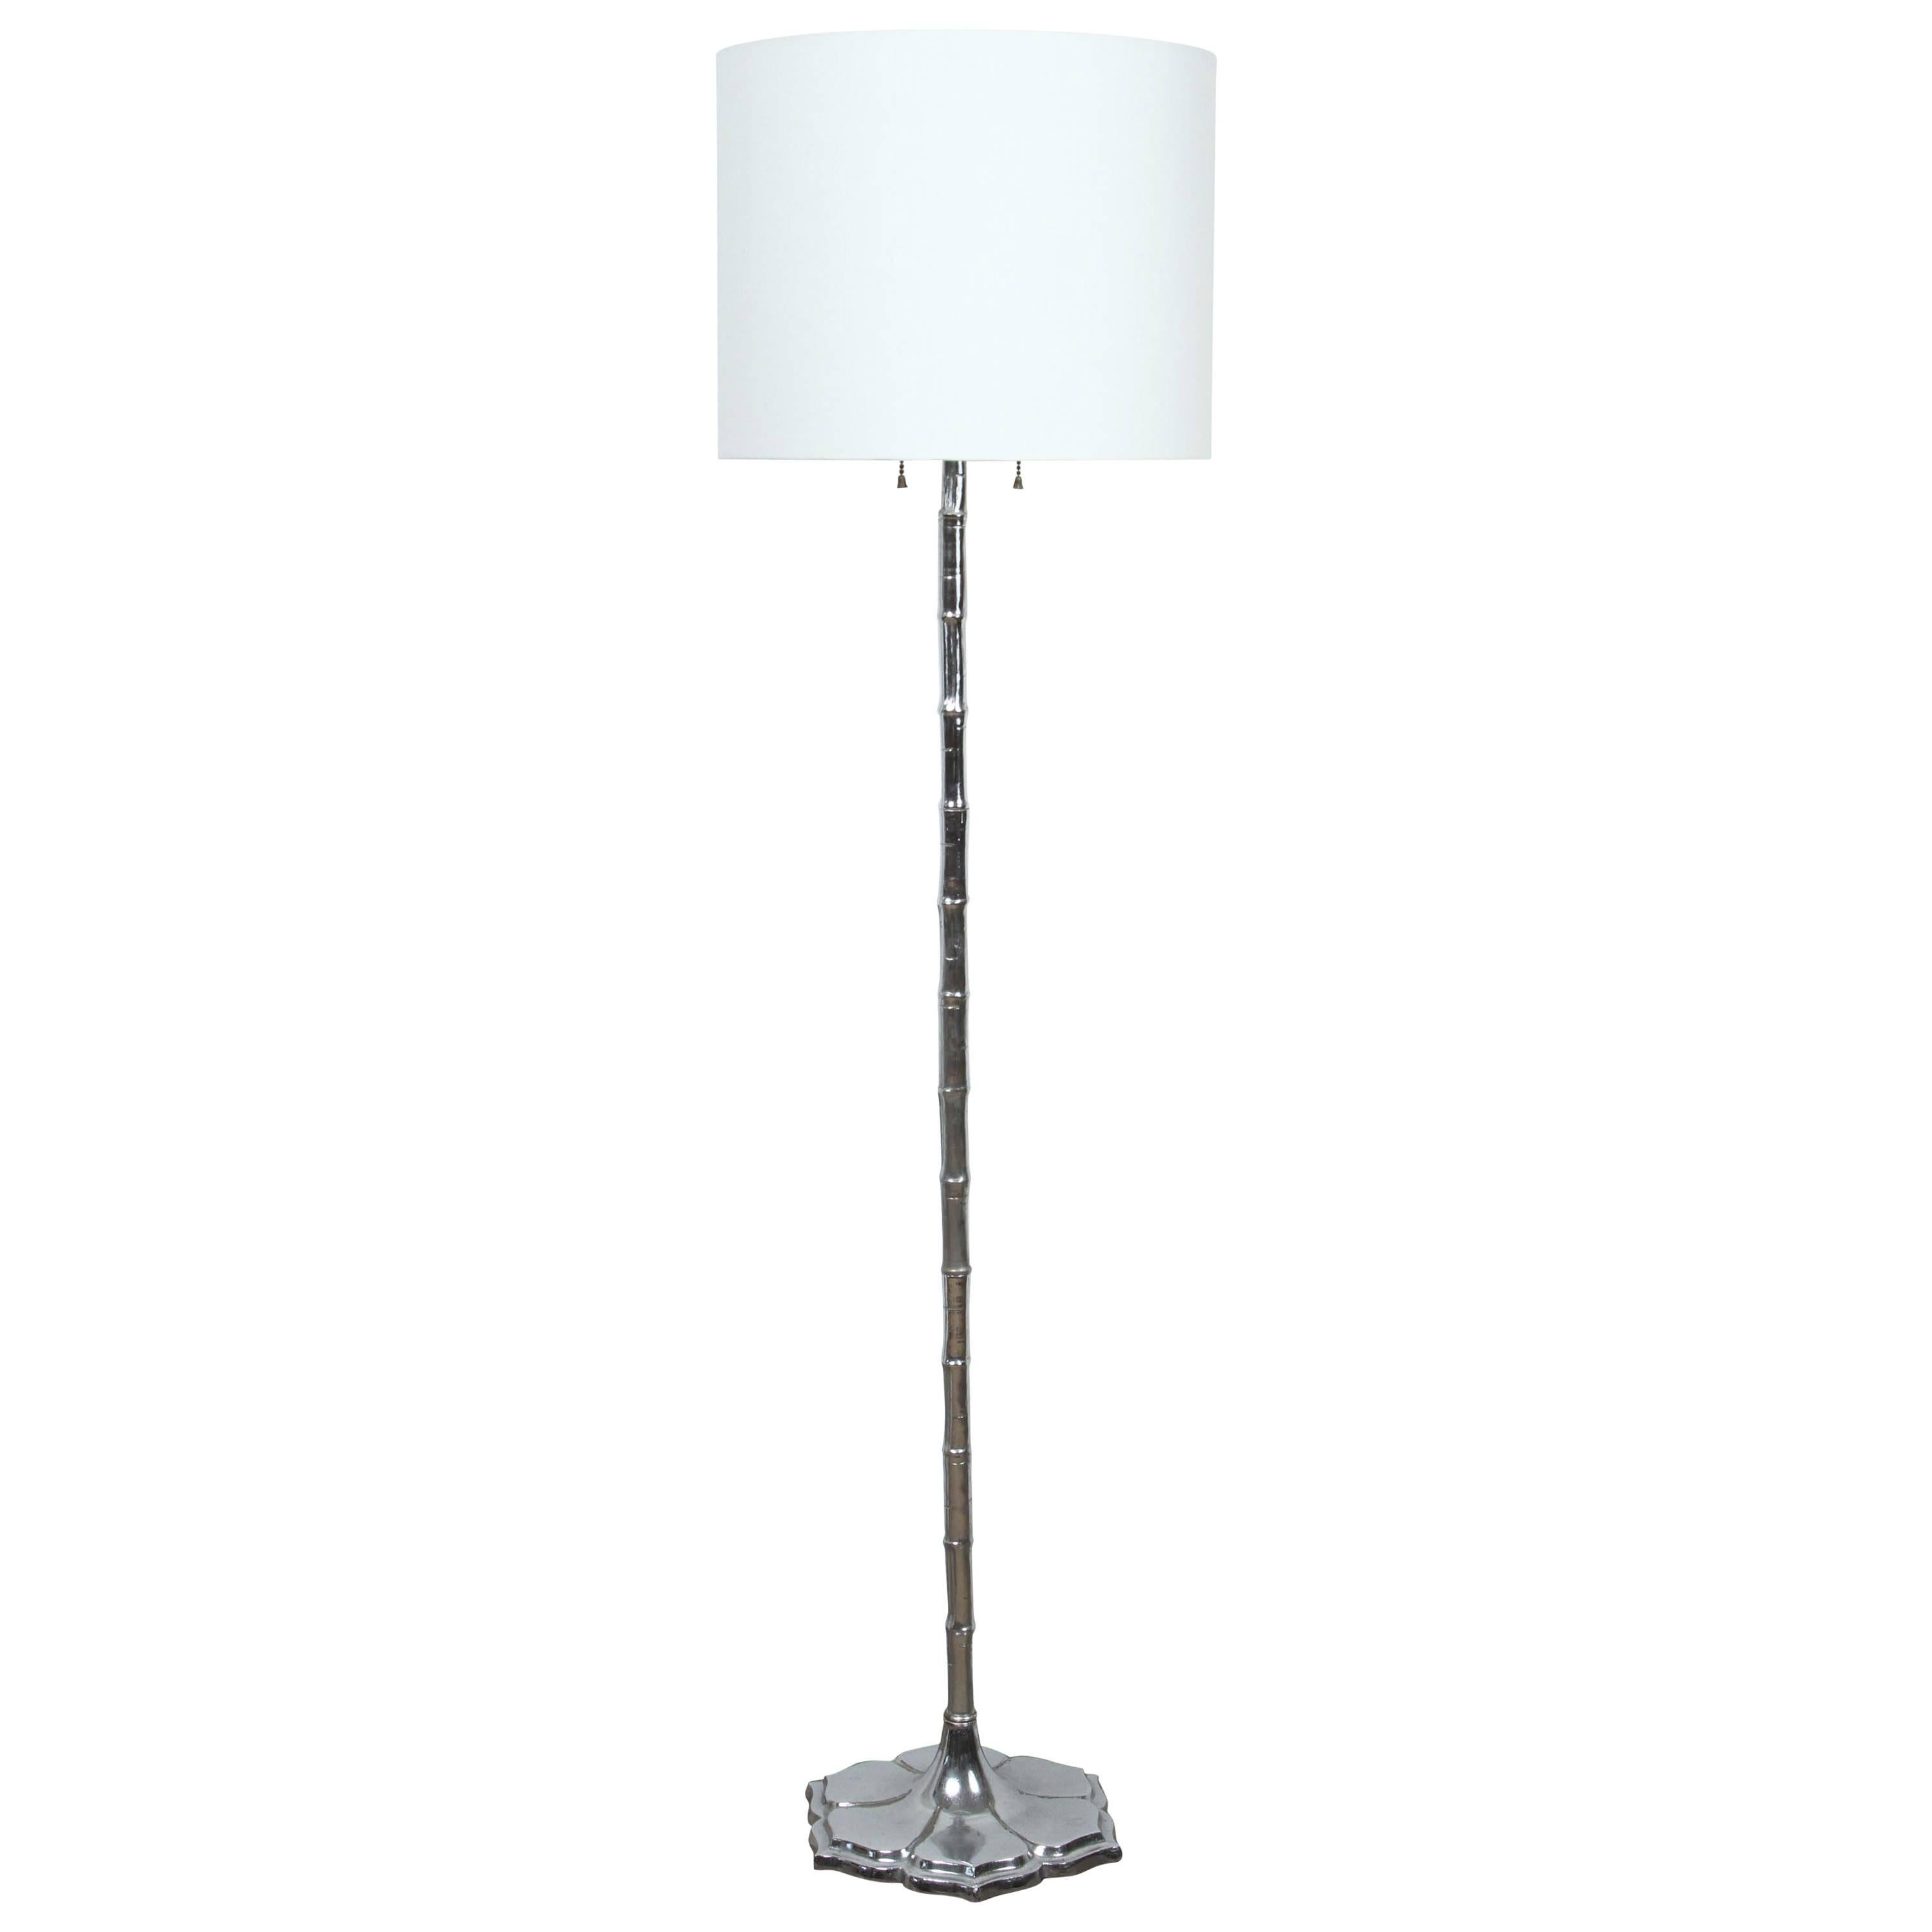 Mid-20th century Floor Lamp For Sale